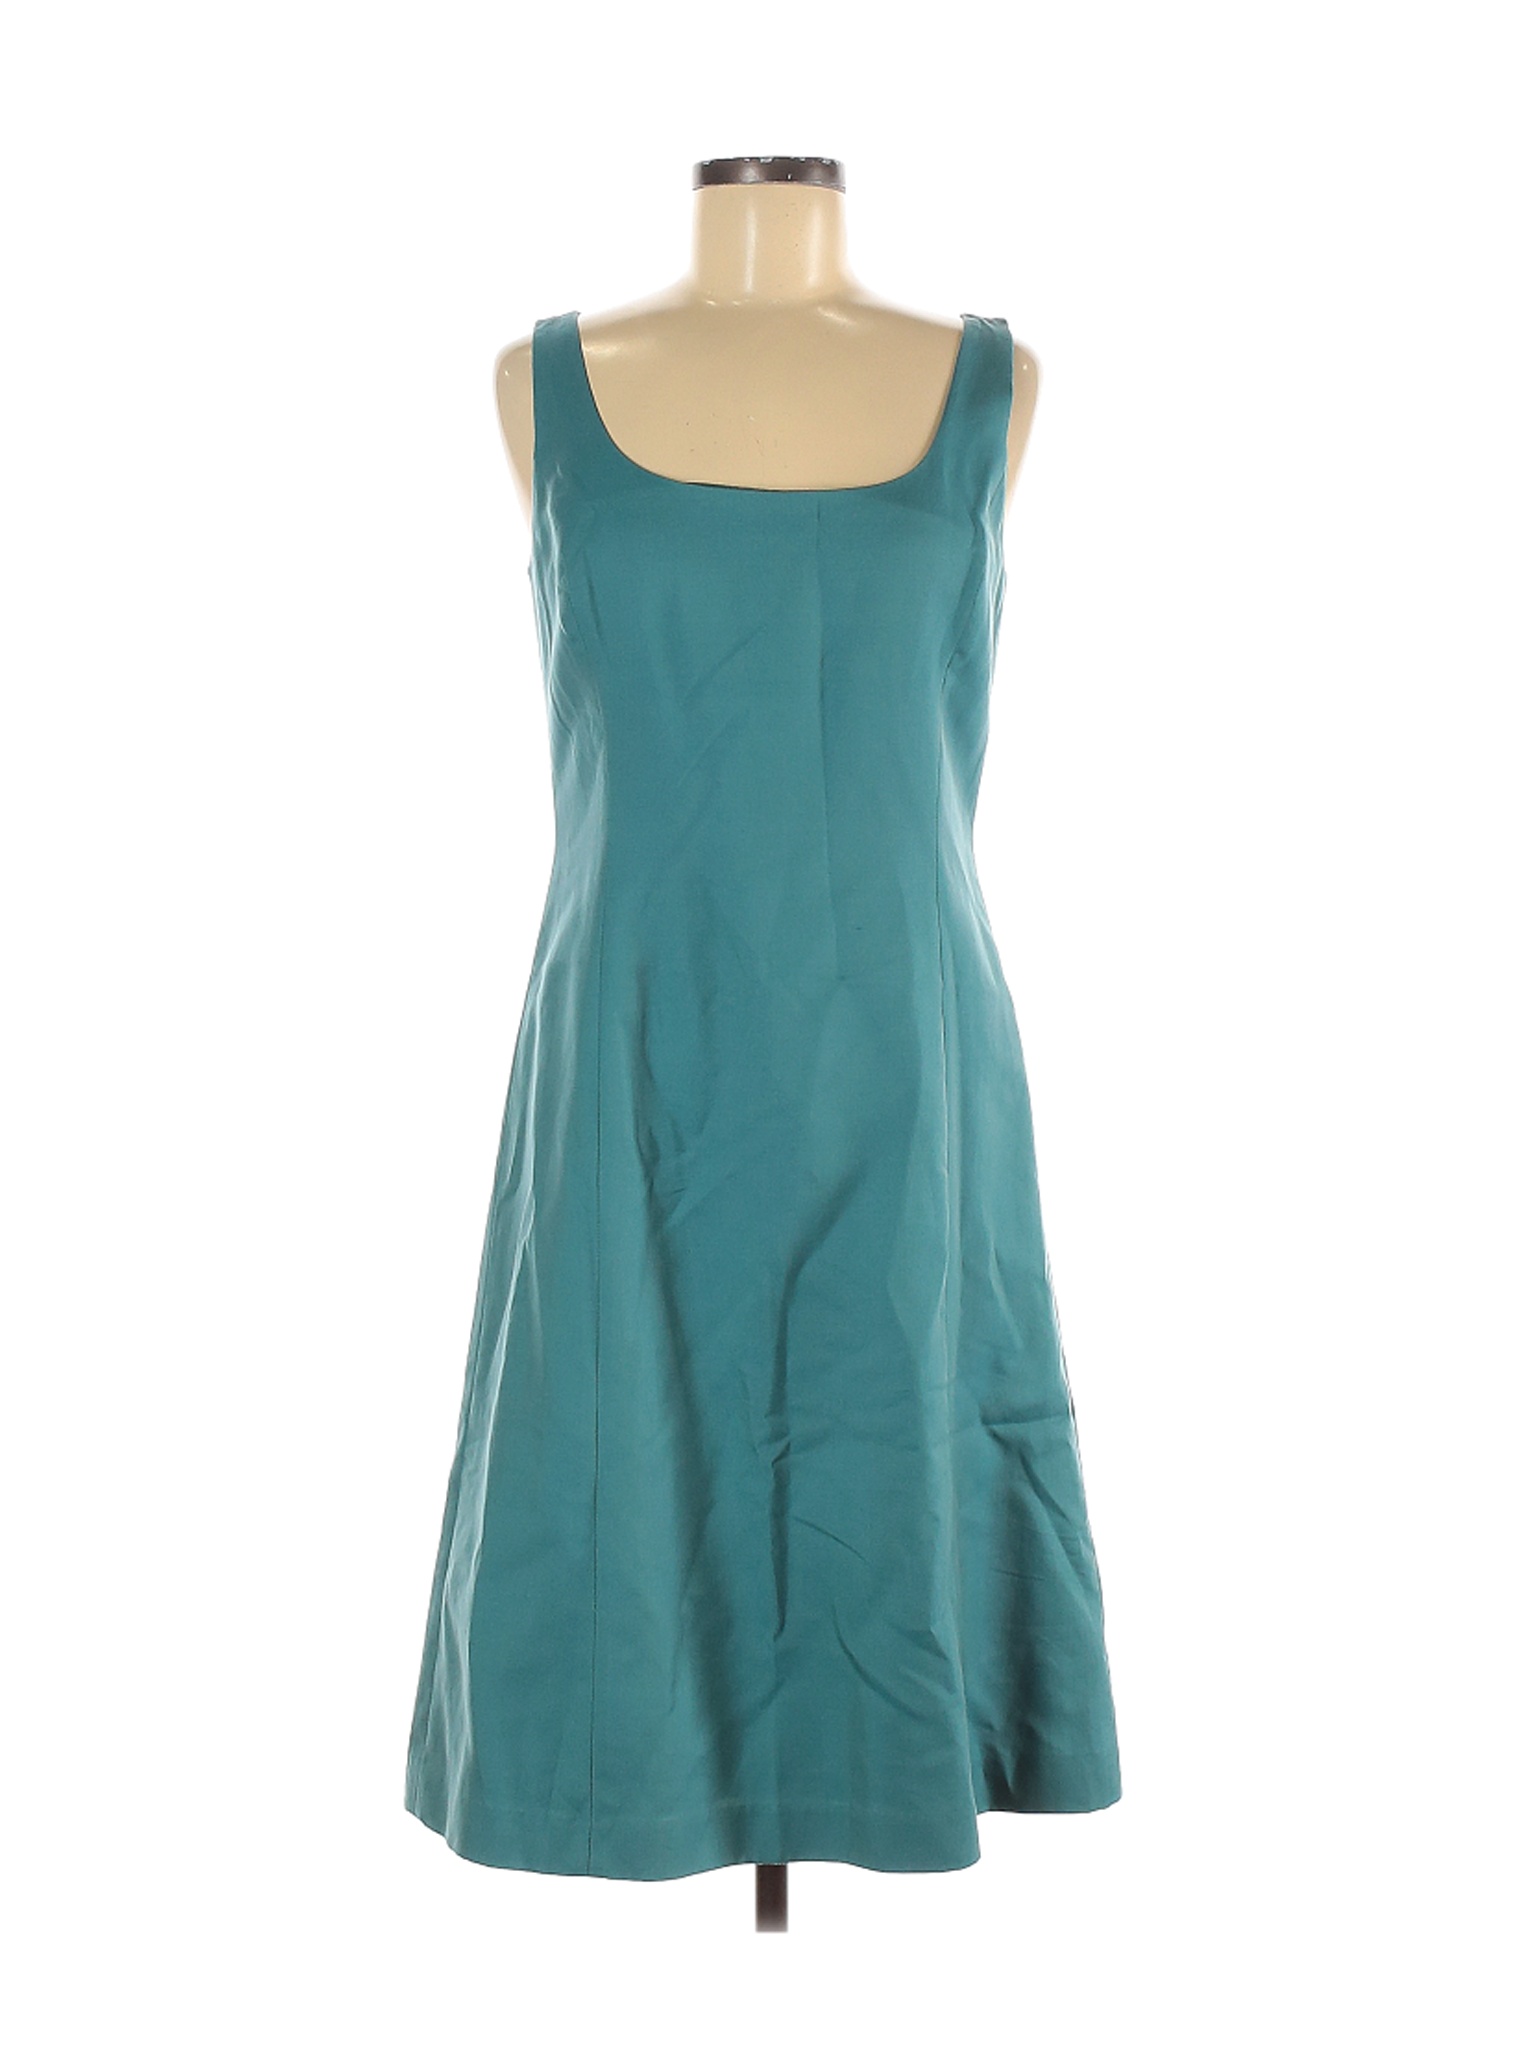 NWT Ann Taylor Women Green Casual Dress 6 | eBay